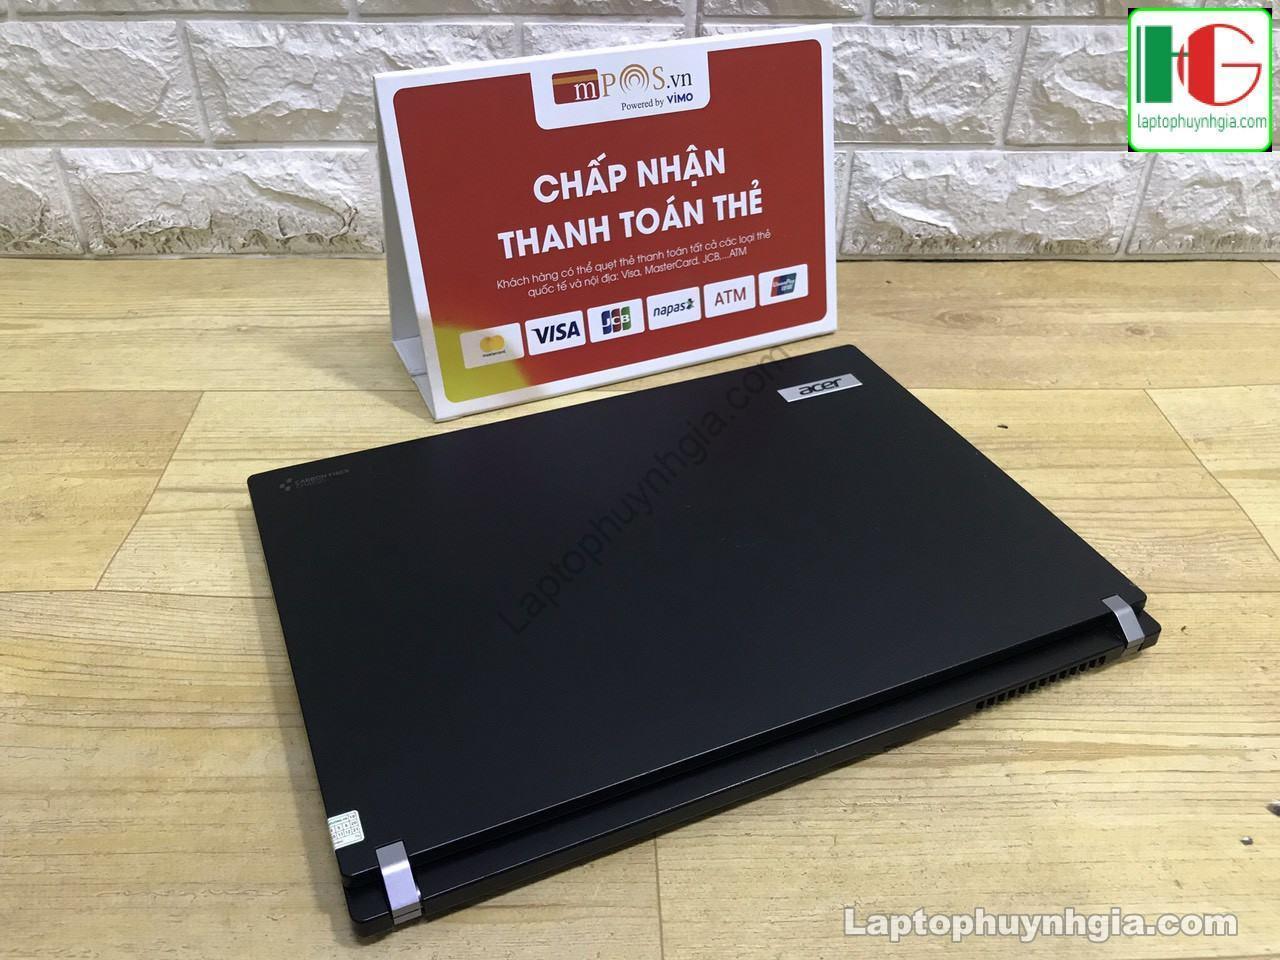 Laptop Acer P658 I5 6200u 4g Hdd 500g Lcd 14 Laptopcubinhduong.vn